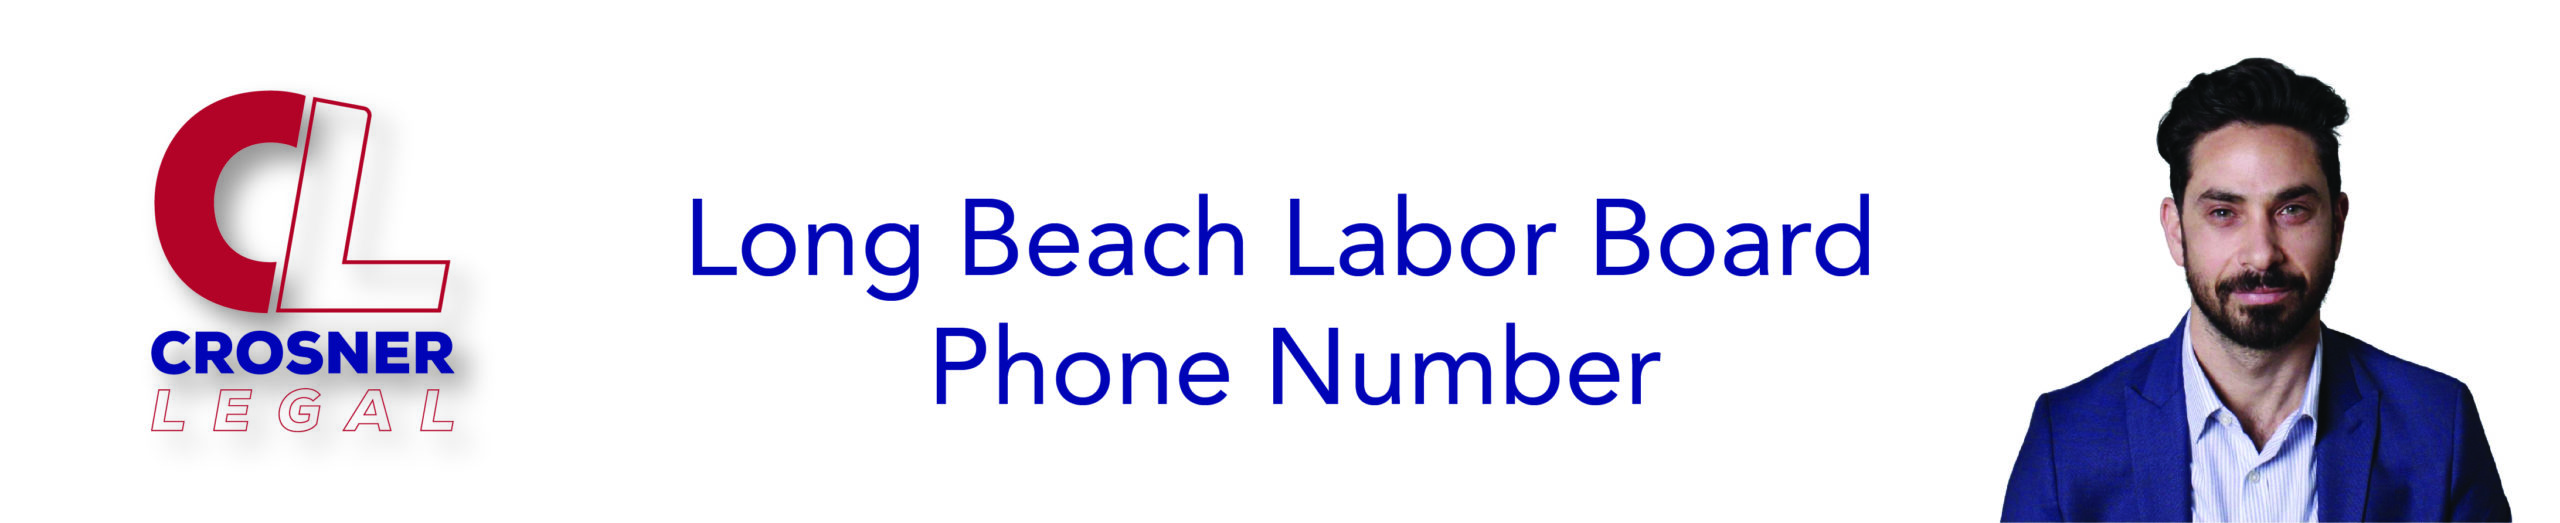 Long Beach Labor Board Phone Number